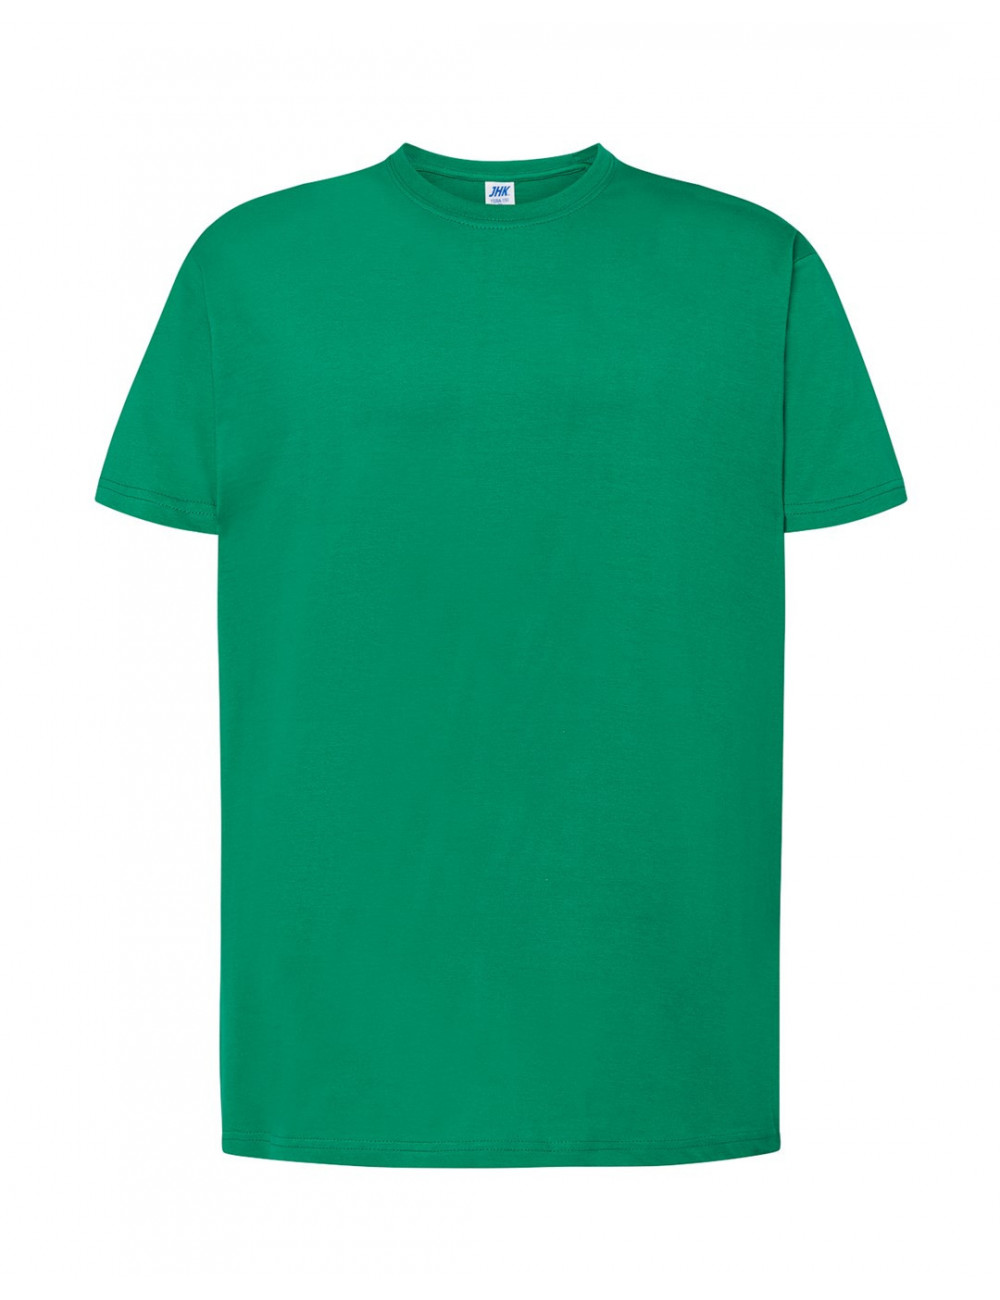 Men`s t-shirt tsra 190 premium kelly green Jhk